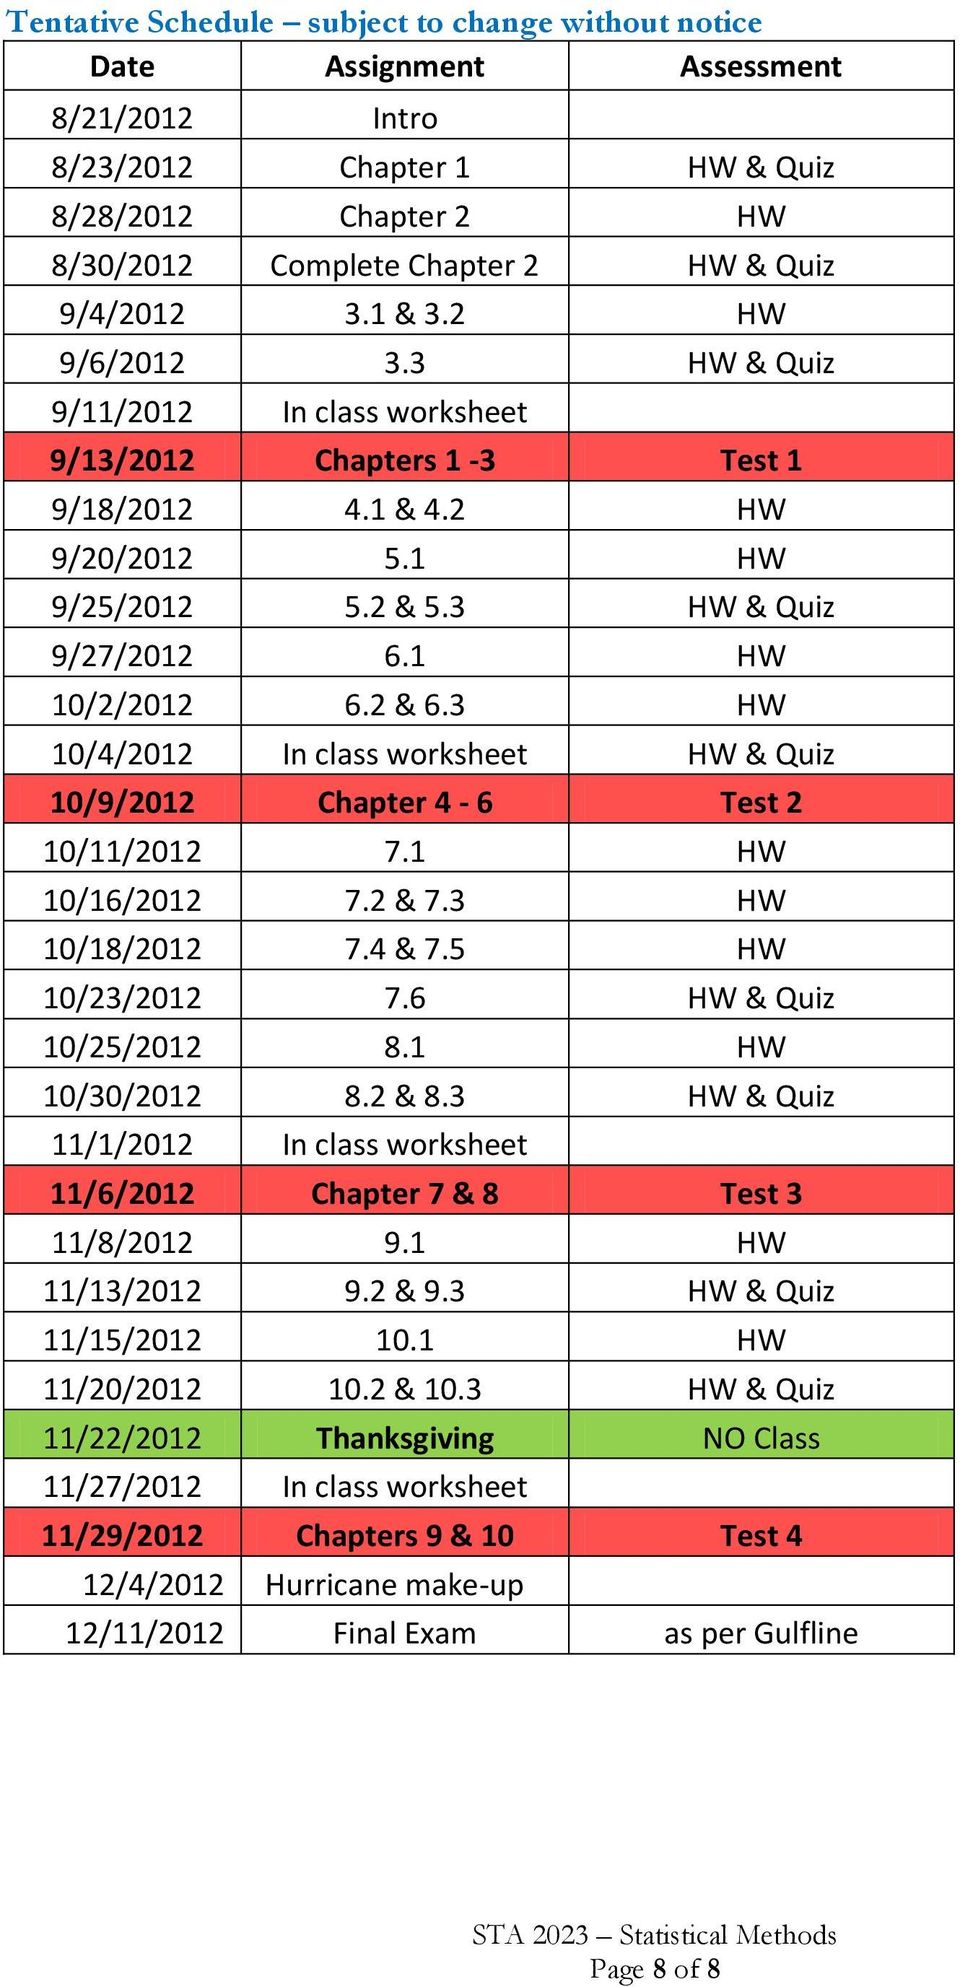 3 HW 10/4/2012 In class worksheet HW & Quiz 10/9/2012 Chapter 4-6 Test 2 10/11/2012 7.1 HW 10/16/2012 7.2 & 7.3 HW 10/18/2012 7.4 & 7.5 HW 10/23/2012 7.6 HW & Quiz 10/25/2012 8.1 HW 10/30/2012 8.